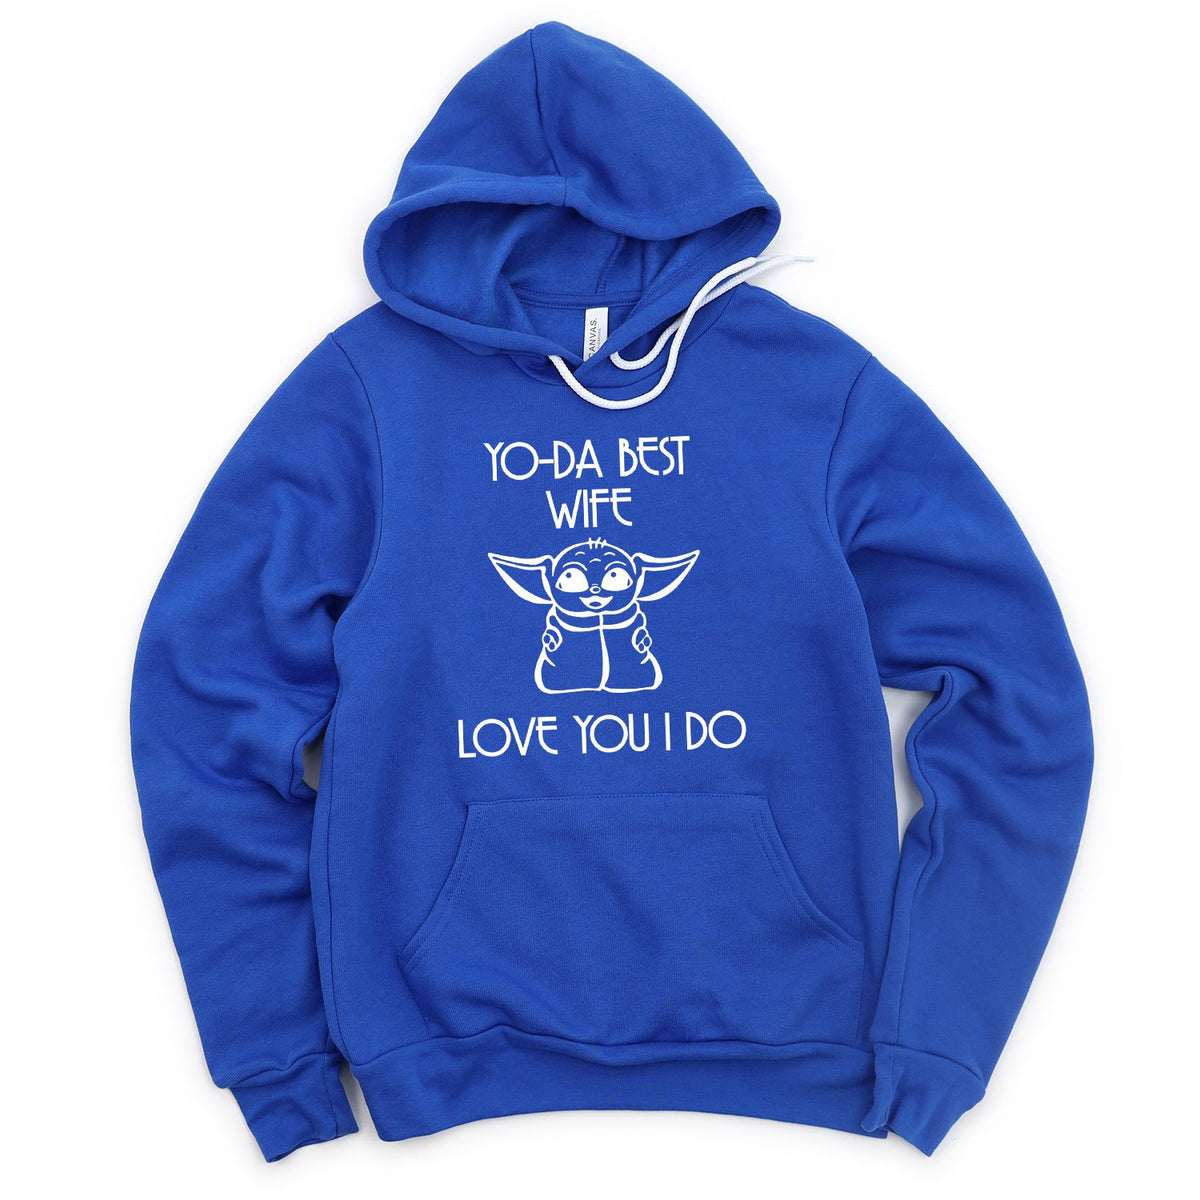 Yo-Da Best Wife Love You I Do - Hoodie Sweatshirt